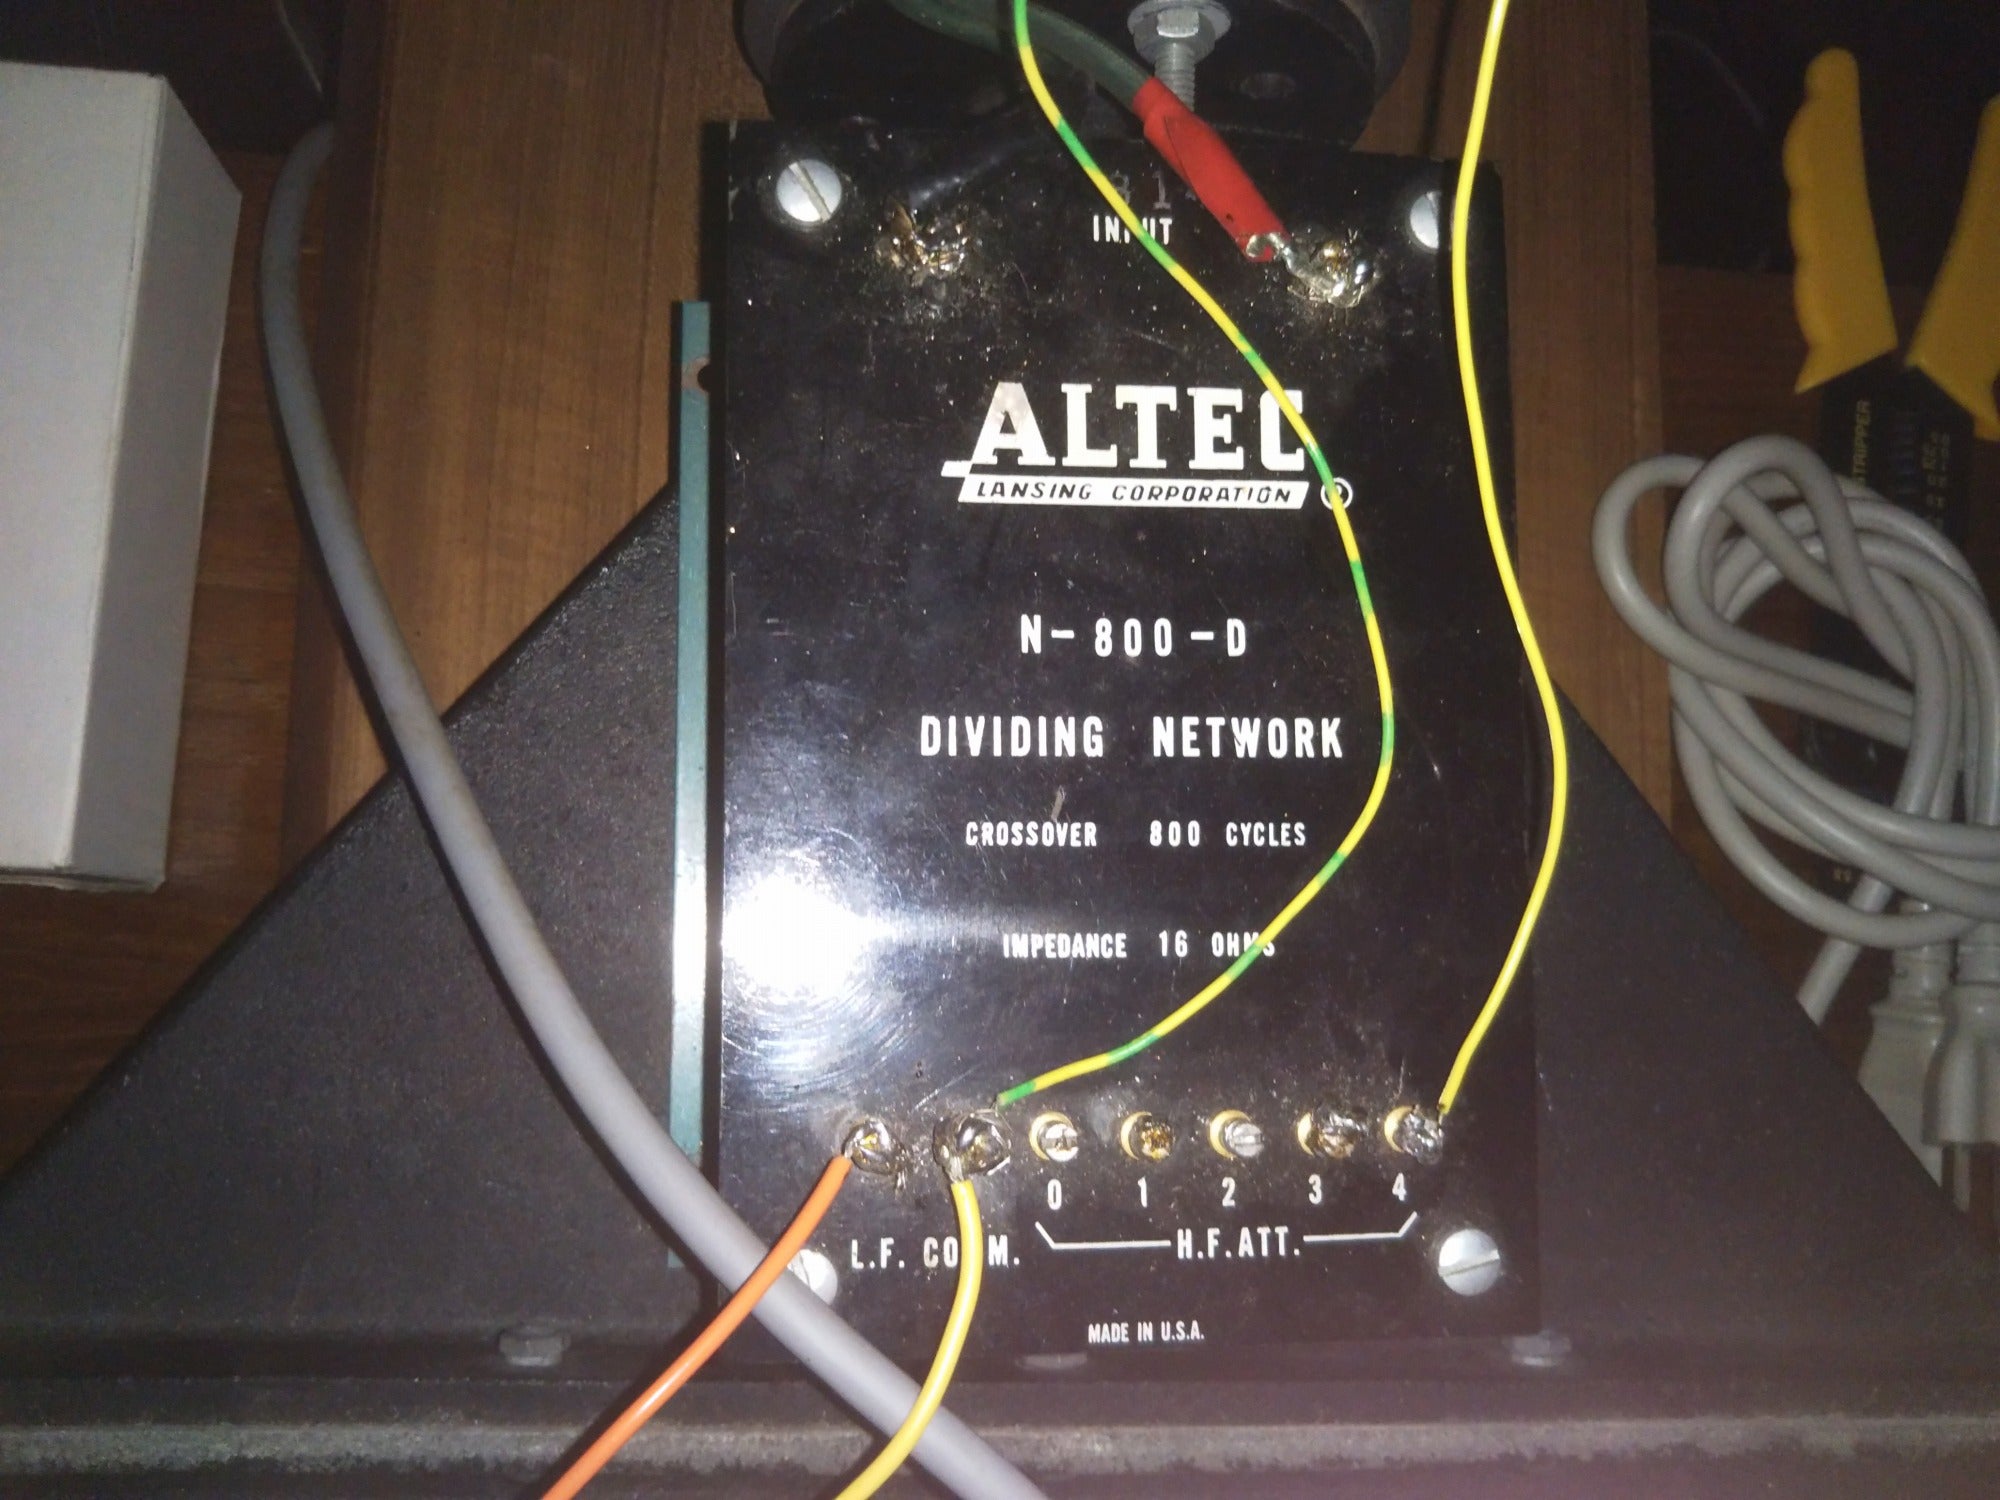 ALTEC N-800-Dってどんなネットワークなのか調べてみよう～(笑) | うに